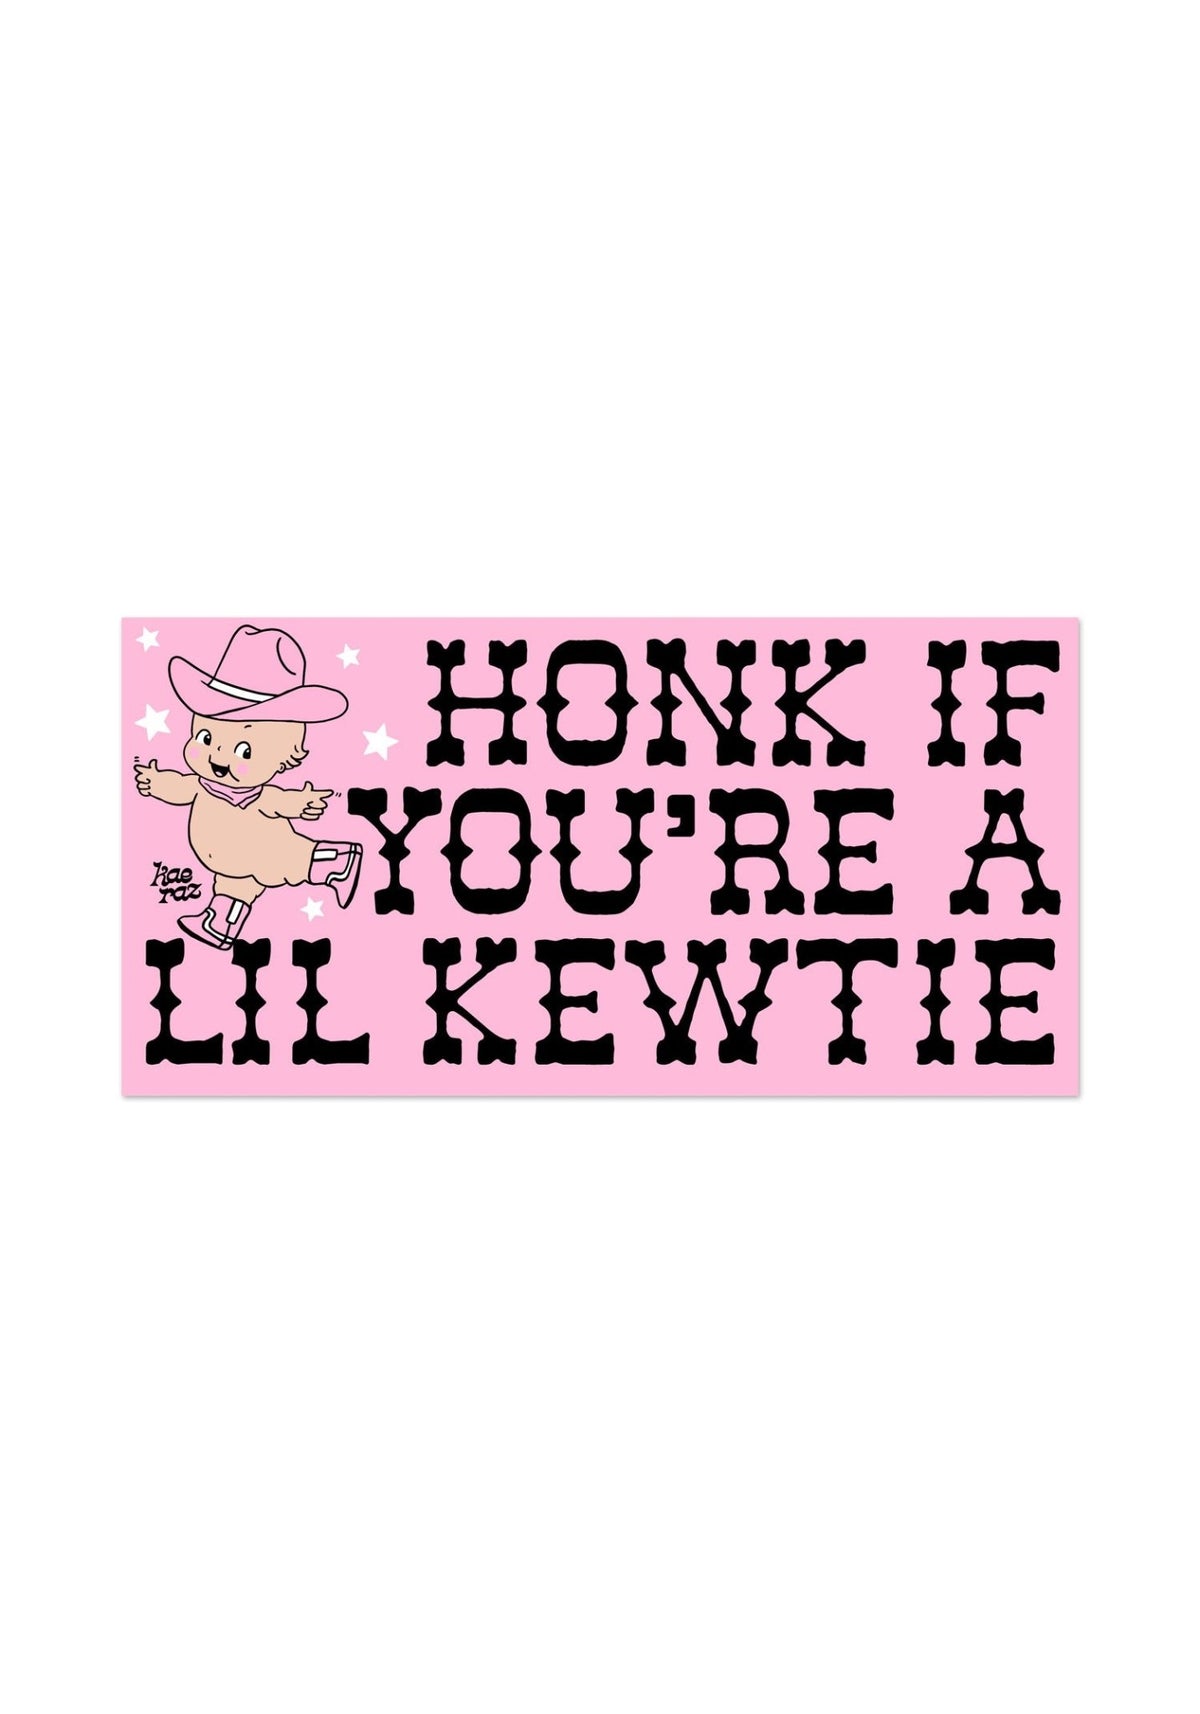 Cowpoke Kewtie Bumper Sticker by kaeraz baby cowboy cowboy boots